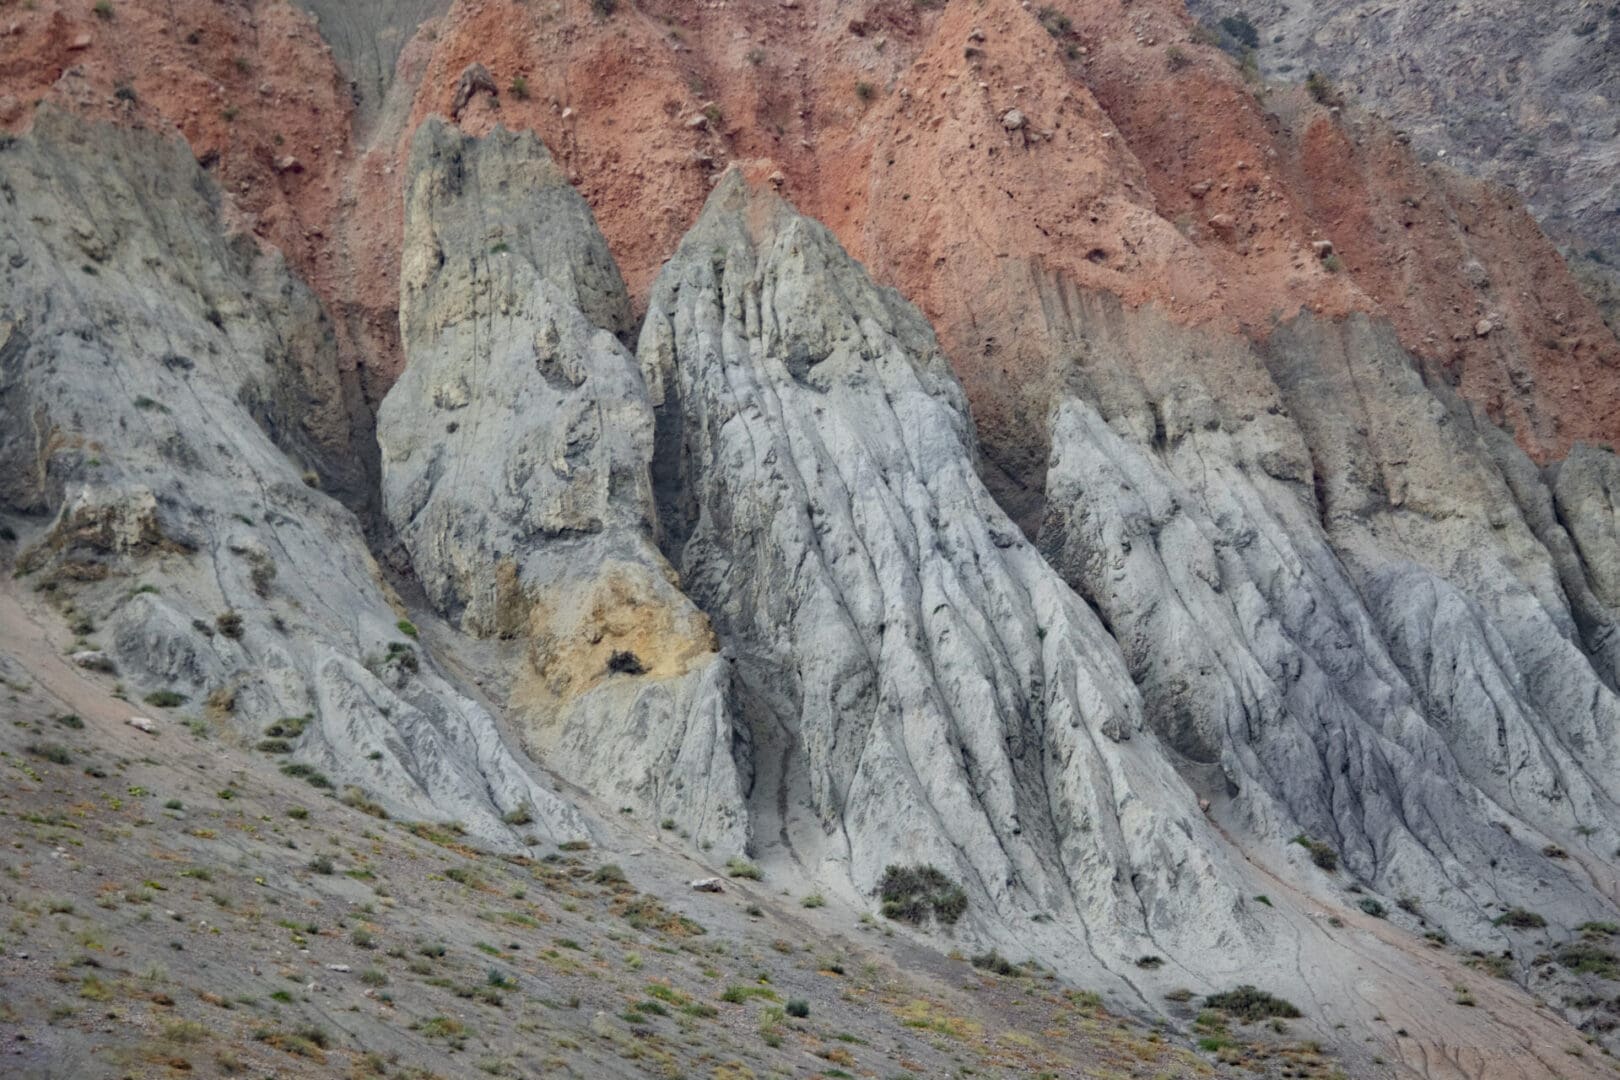 A man is riding a horse near a rocky mountain.